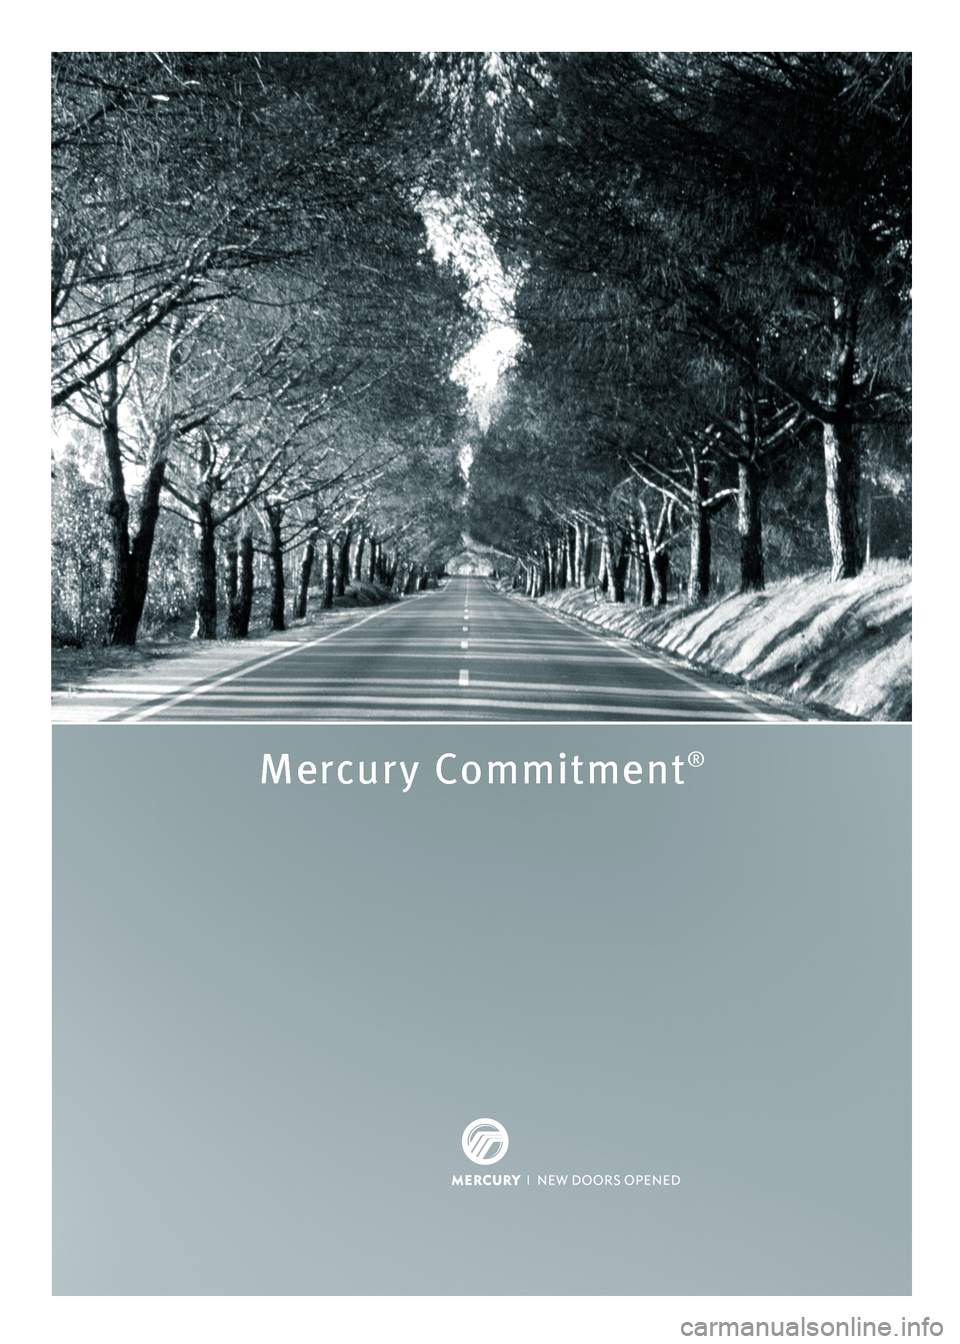 Mercury Mariner 2008  Customer Assistance Guide Roadside Assistance
Mercury Commitment®
800 241-3673
Roadside Assistance
Mercury Commitment®
800 241-3673
8W3J 19328 AA 
April 2007 
First Printing
Mercury Commitment  Litho in U.S.A.
*8W3J_19328_AA